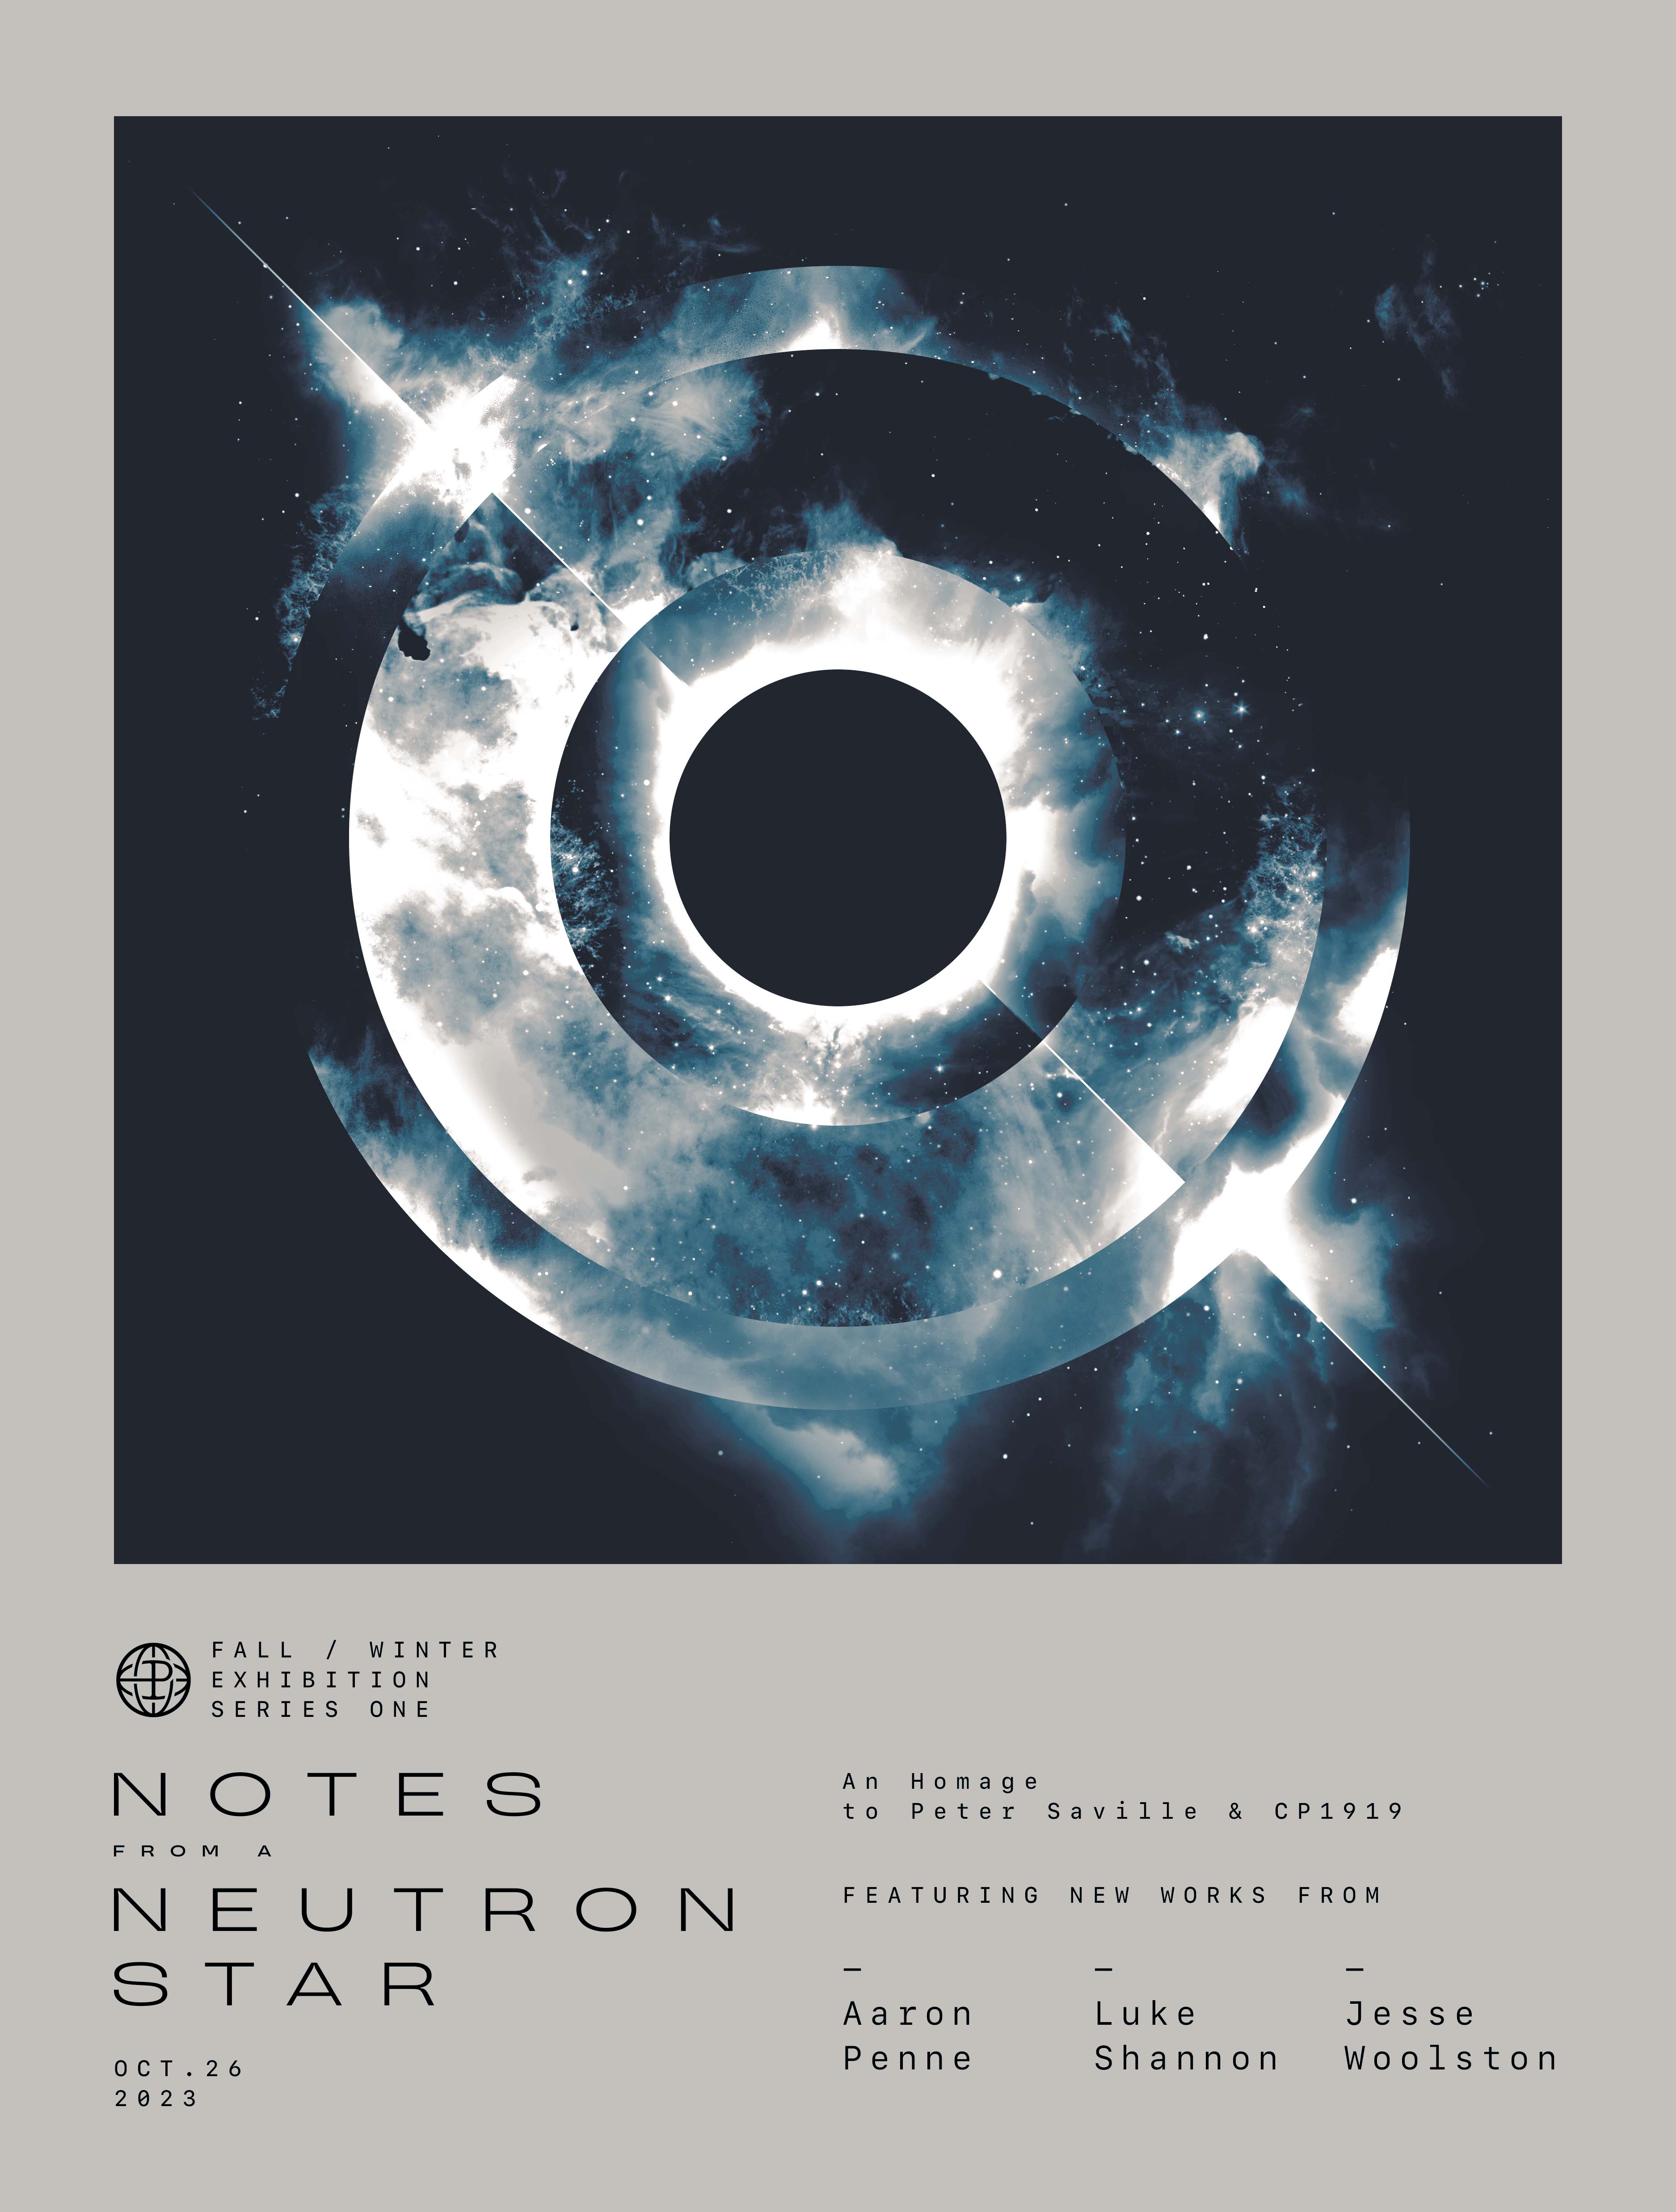 Artifact #1: Notes from a Neutron Star